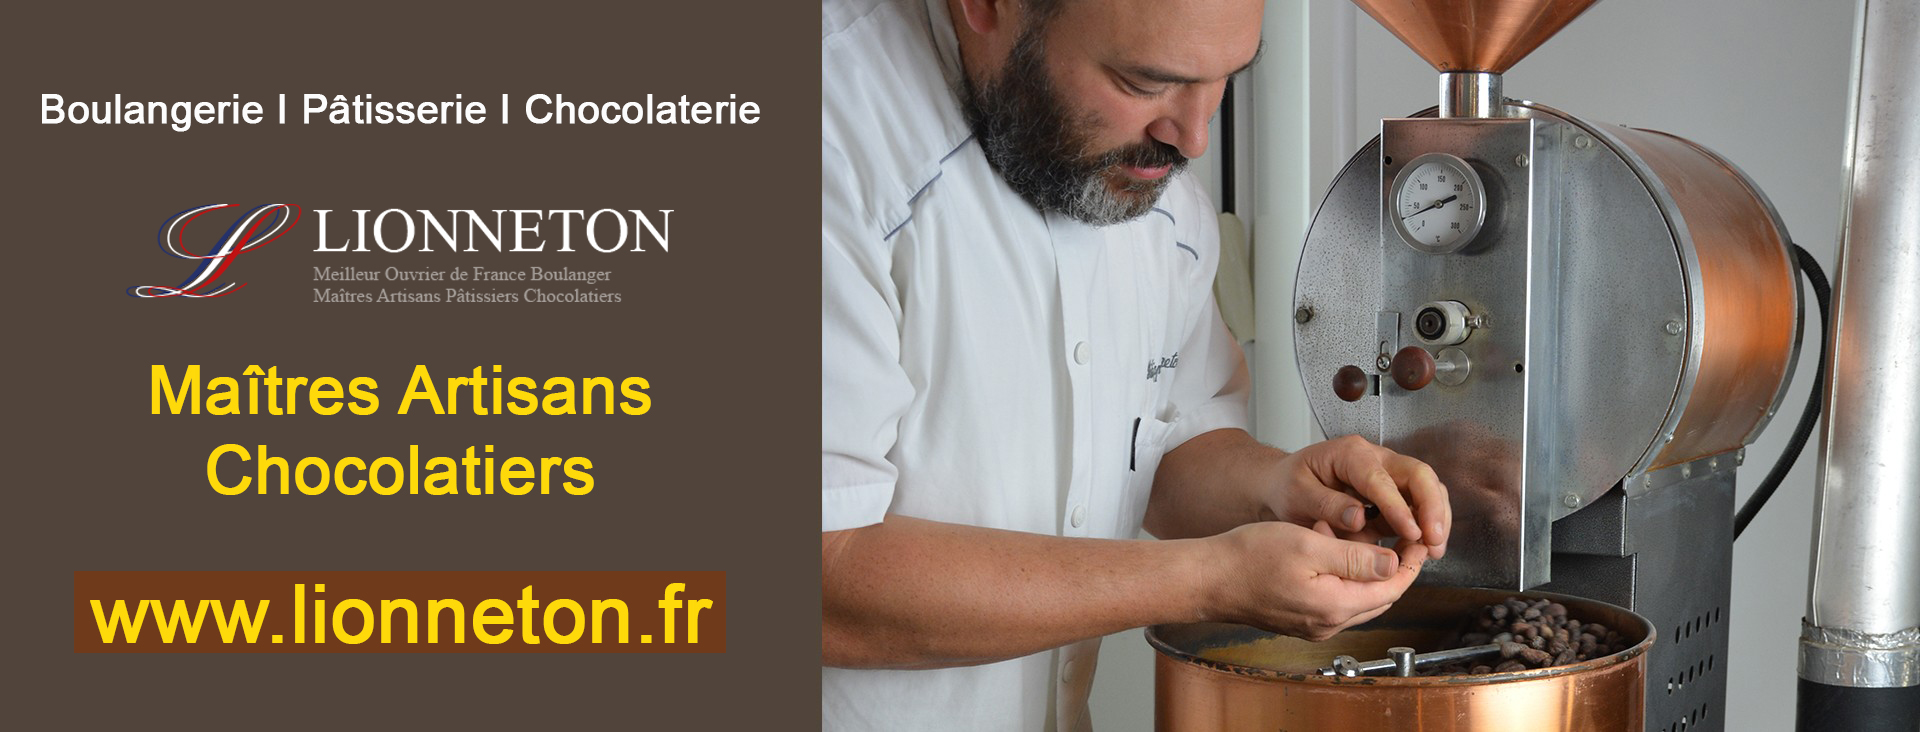 Boulangerie I Pâtisserie I Chocolaterie LIONNETON